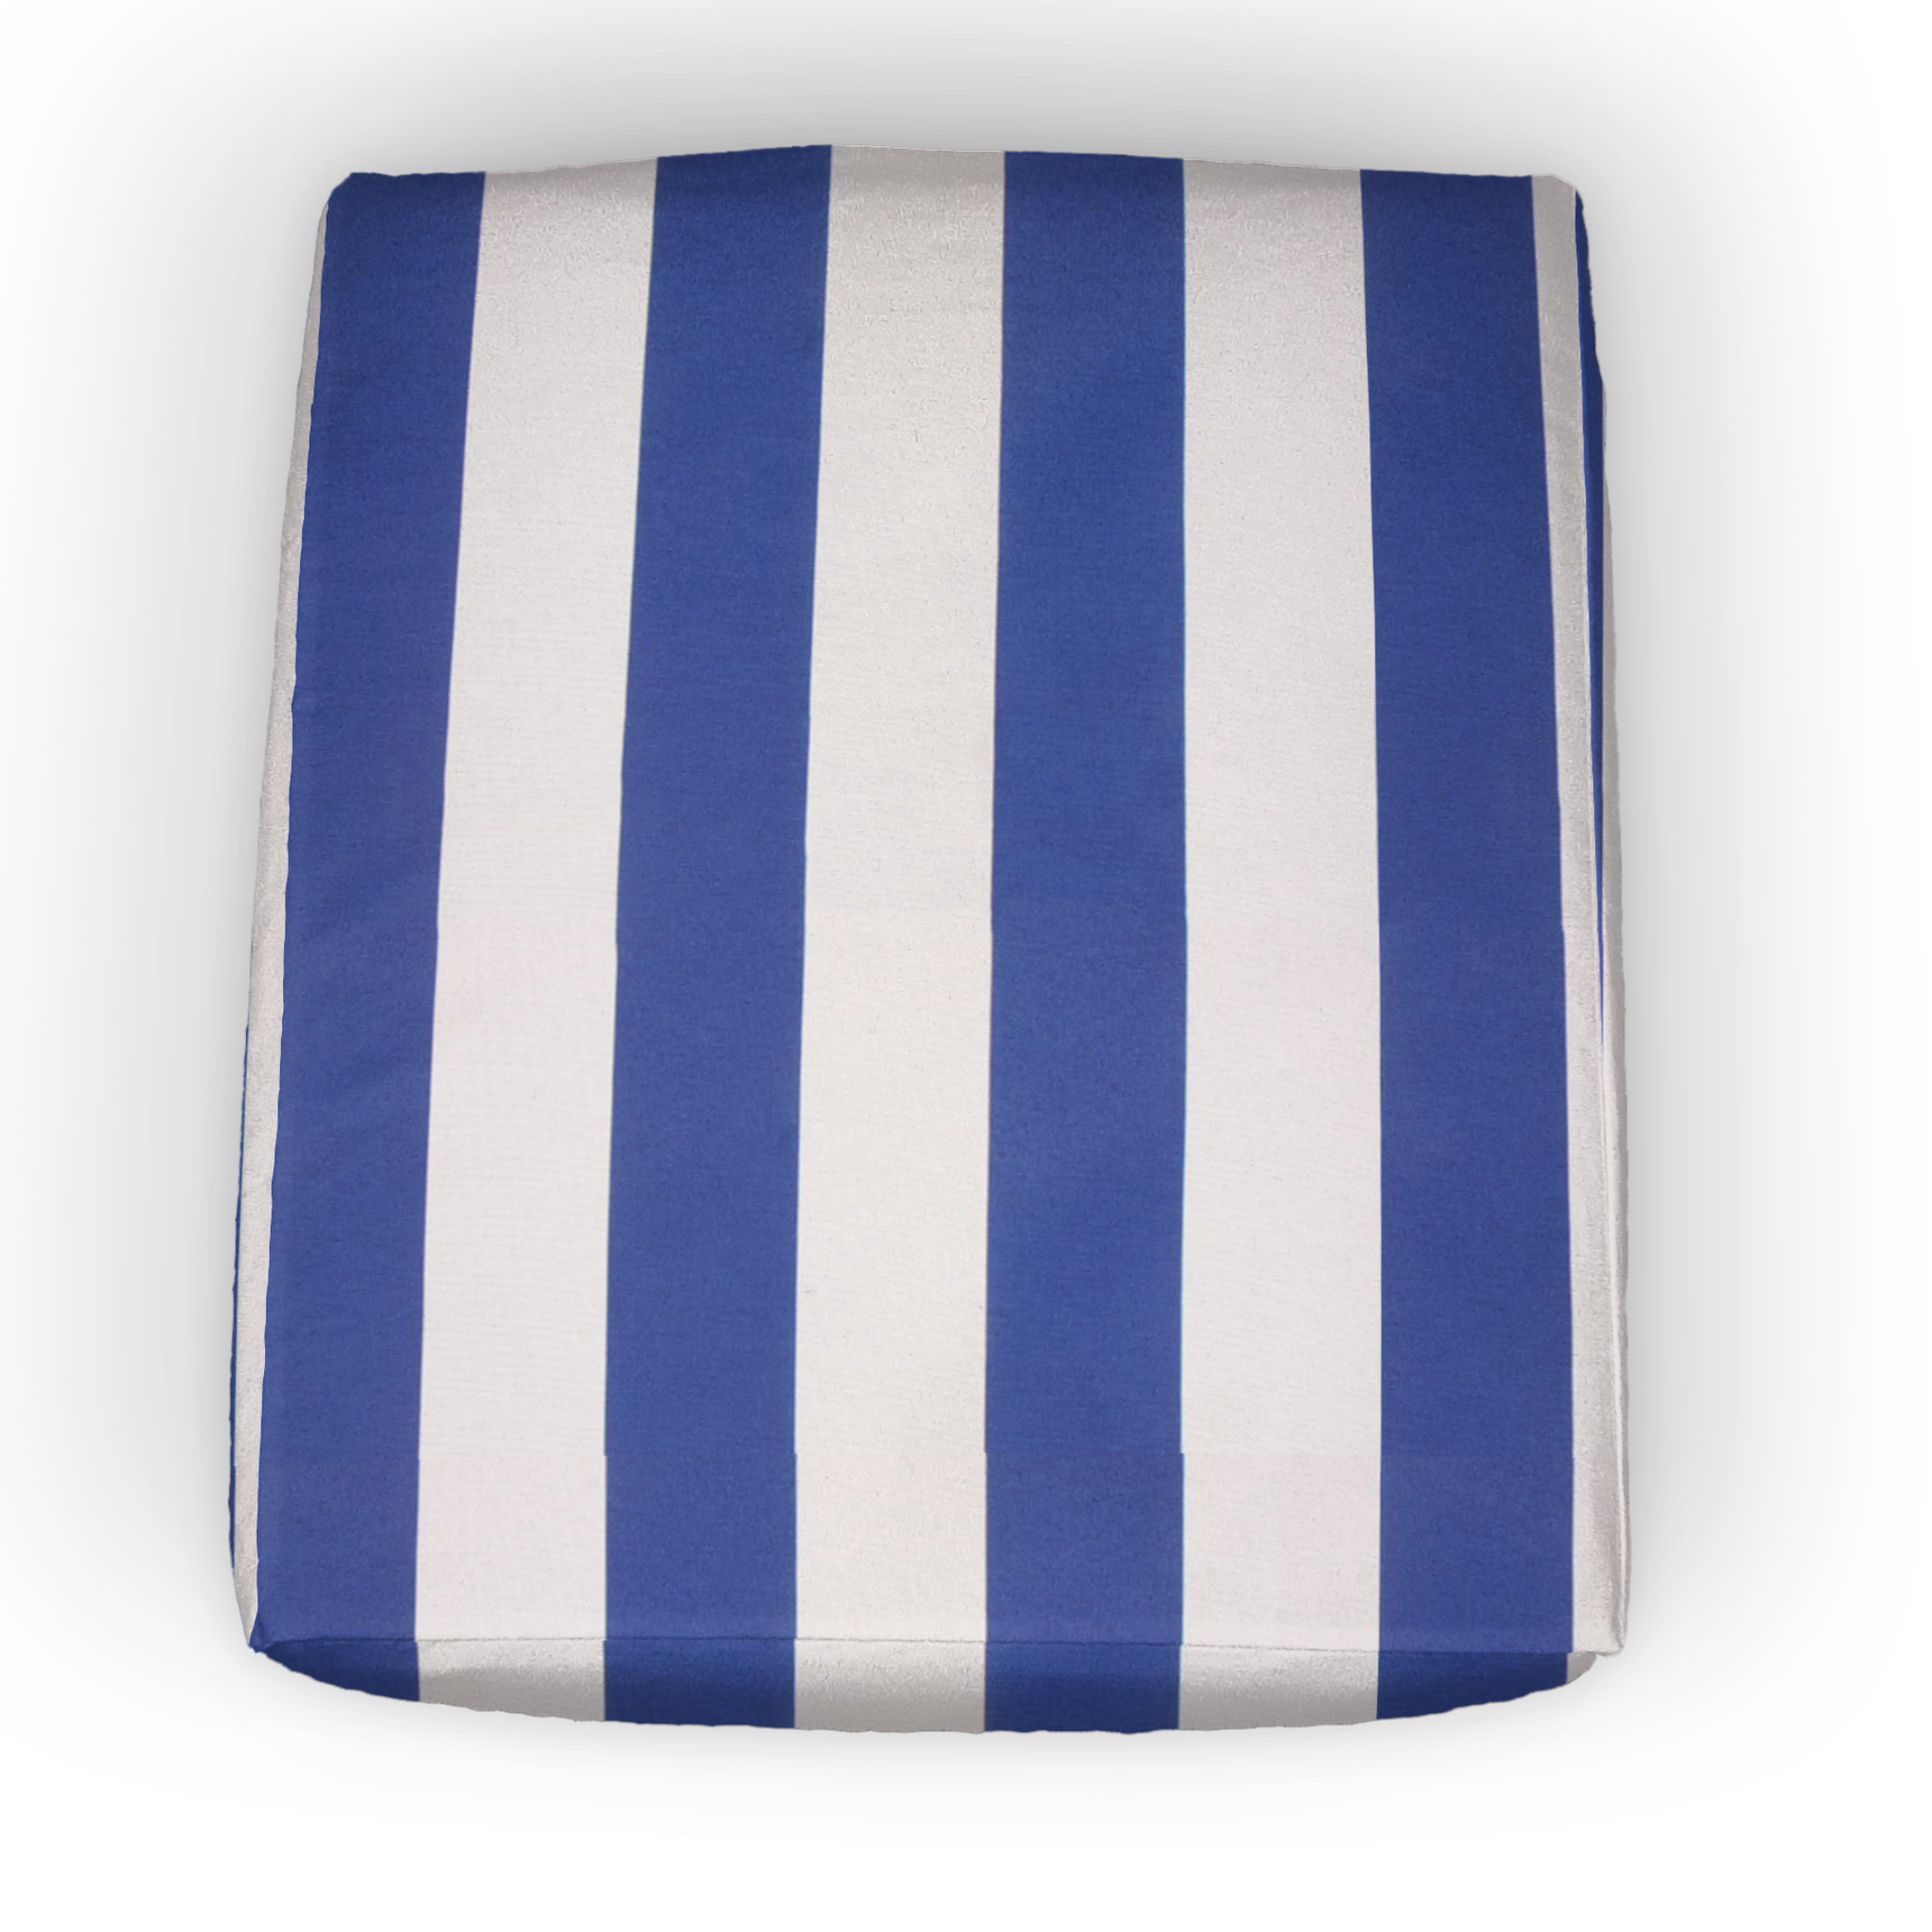 Fabric Sample Only 3x5 inch - Cabana Stripe